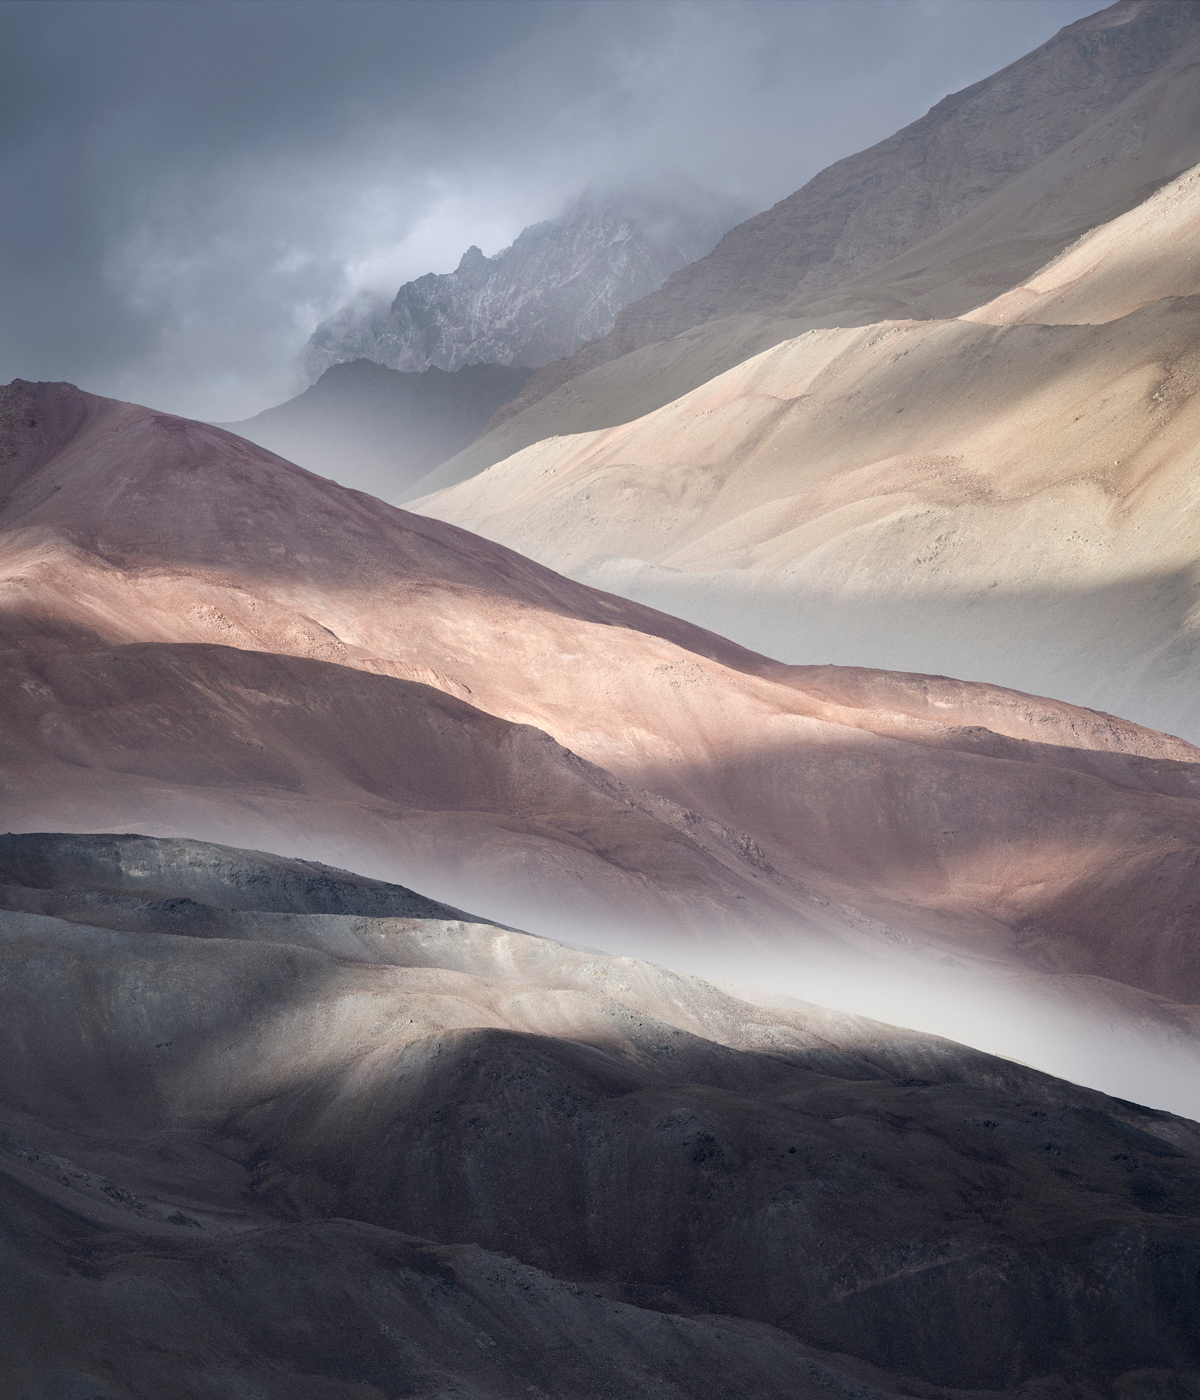 1st Place: © Benjamin Briones Grandi, Andes-Interior, 'The 9th International Landscape Photographer of the Year', internationallandscapephotographer.com, ILPOTY